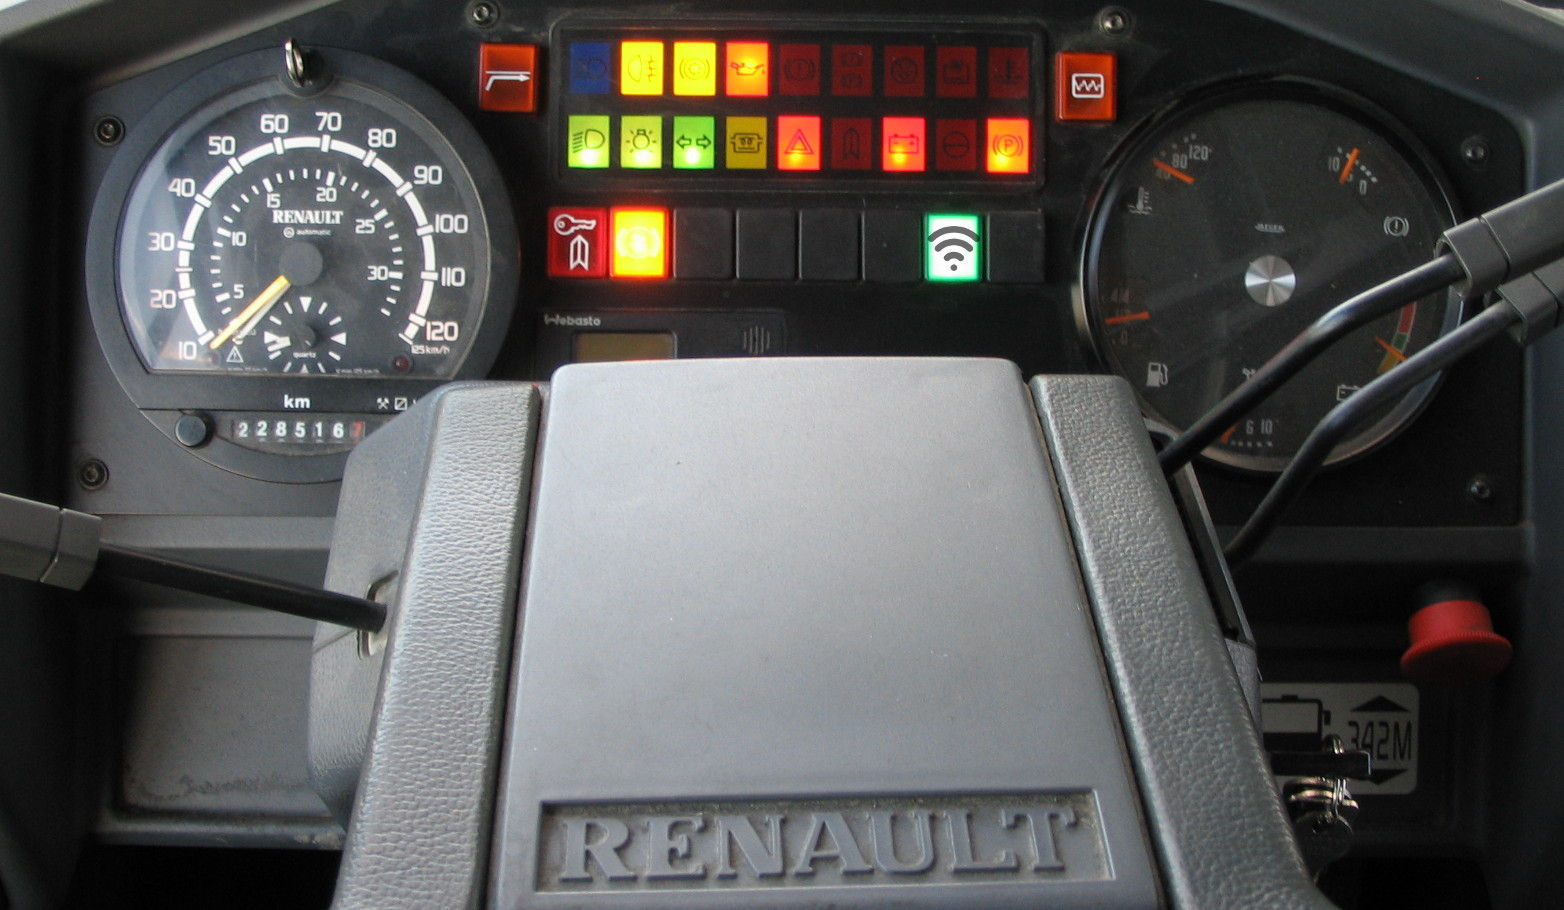 Vergrösserte Ansicht: Renault Tracer Armaturenbrett (CC0 1.0 by J. Bertrand via Wikimedia Commons / refined by o-media.org)